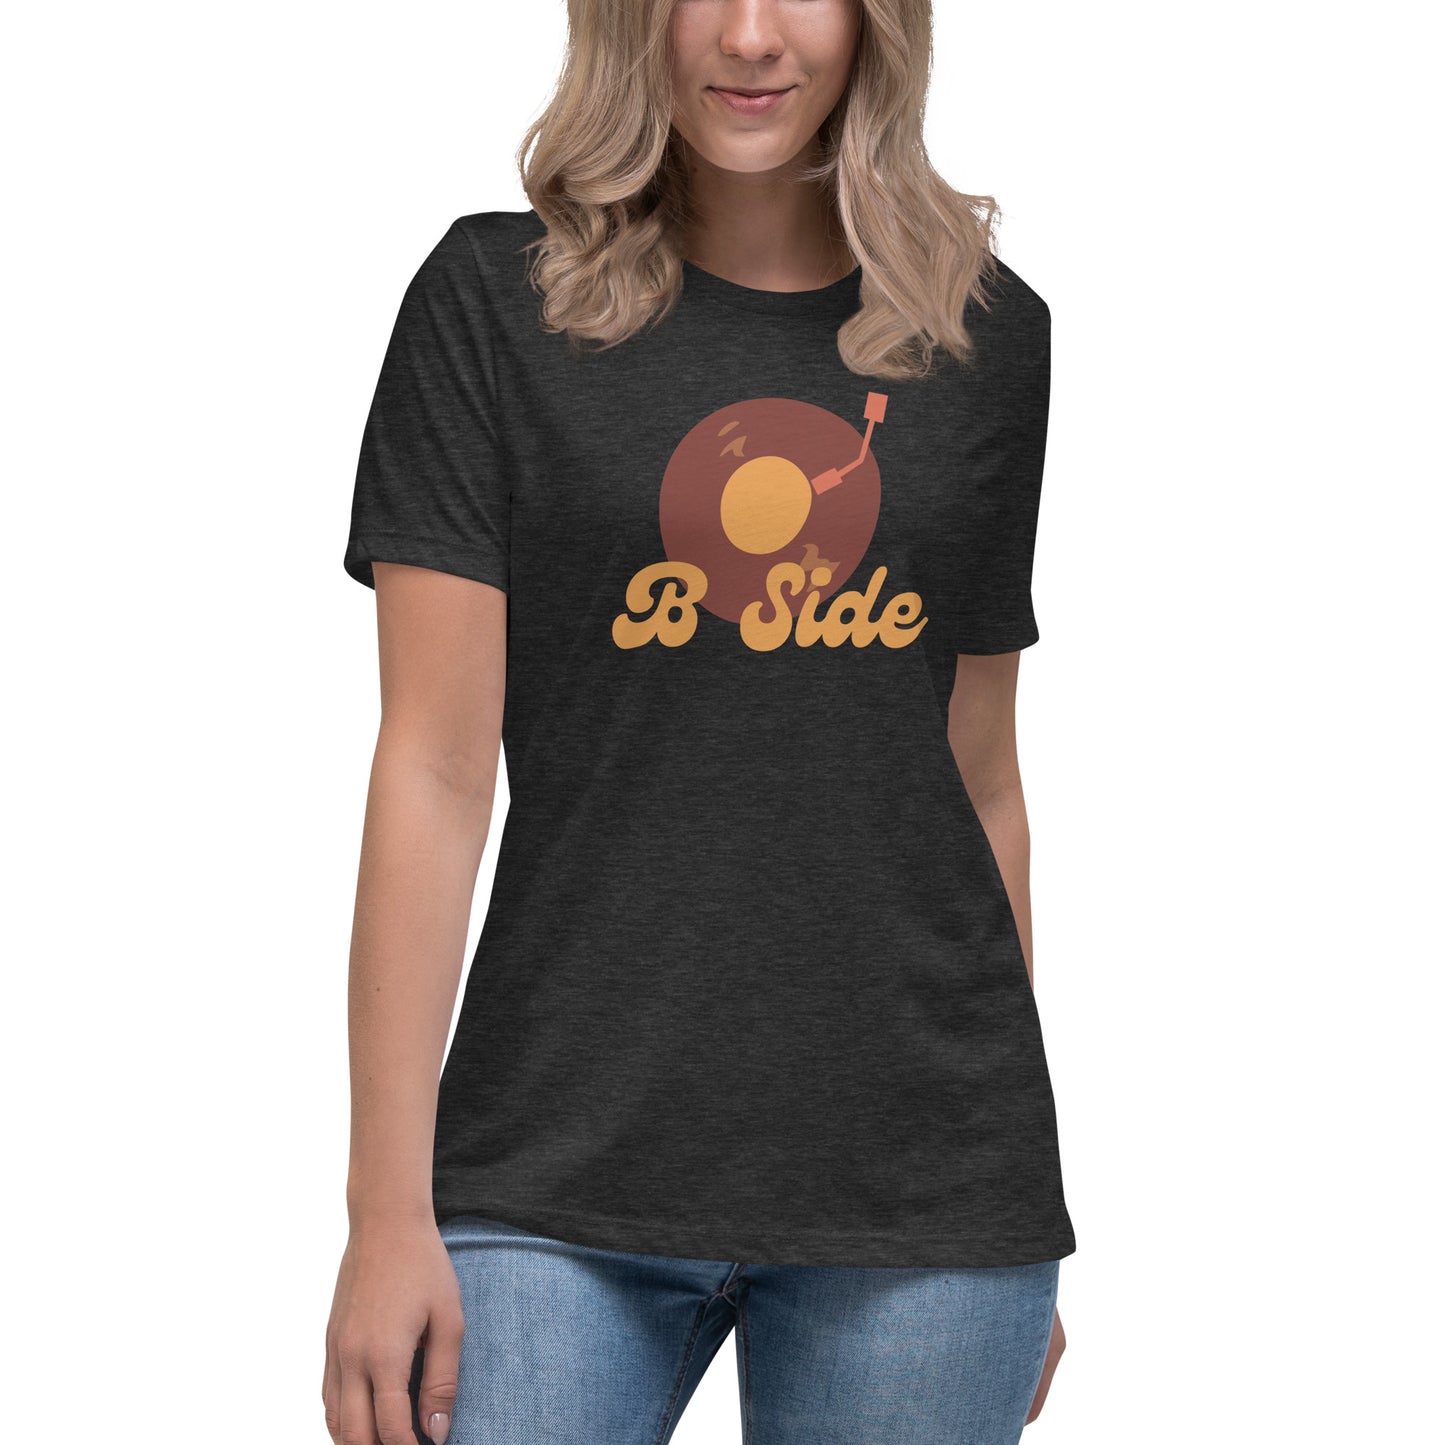 B Side Women's Relaxed T-Shirt